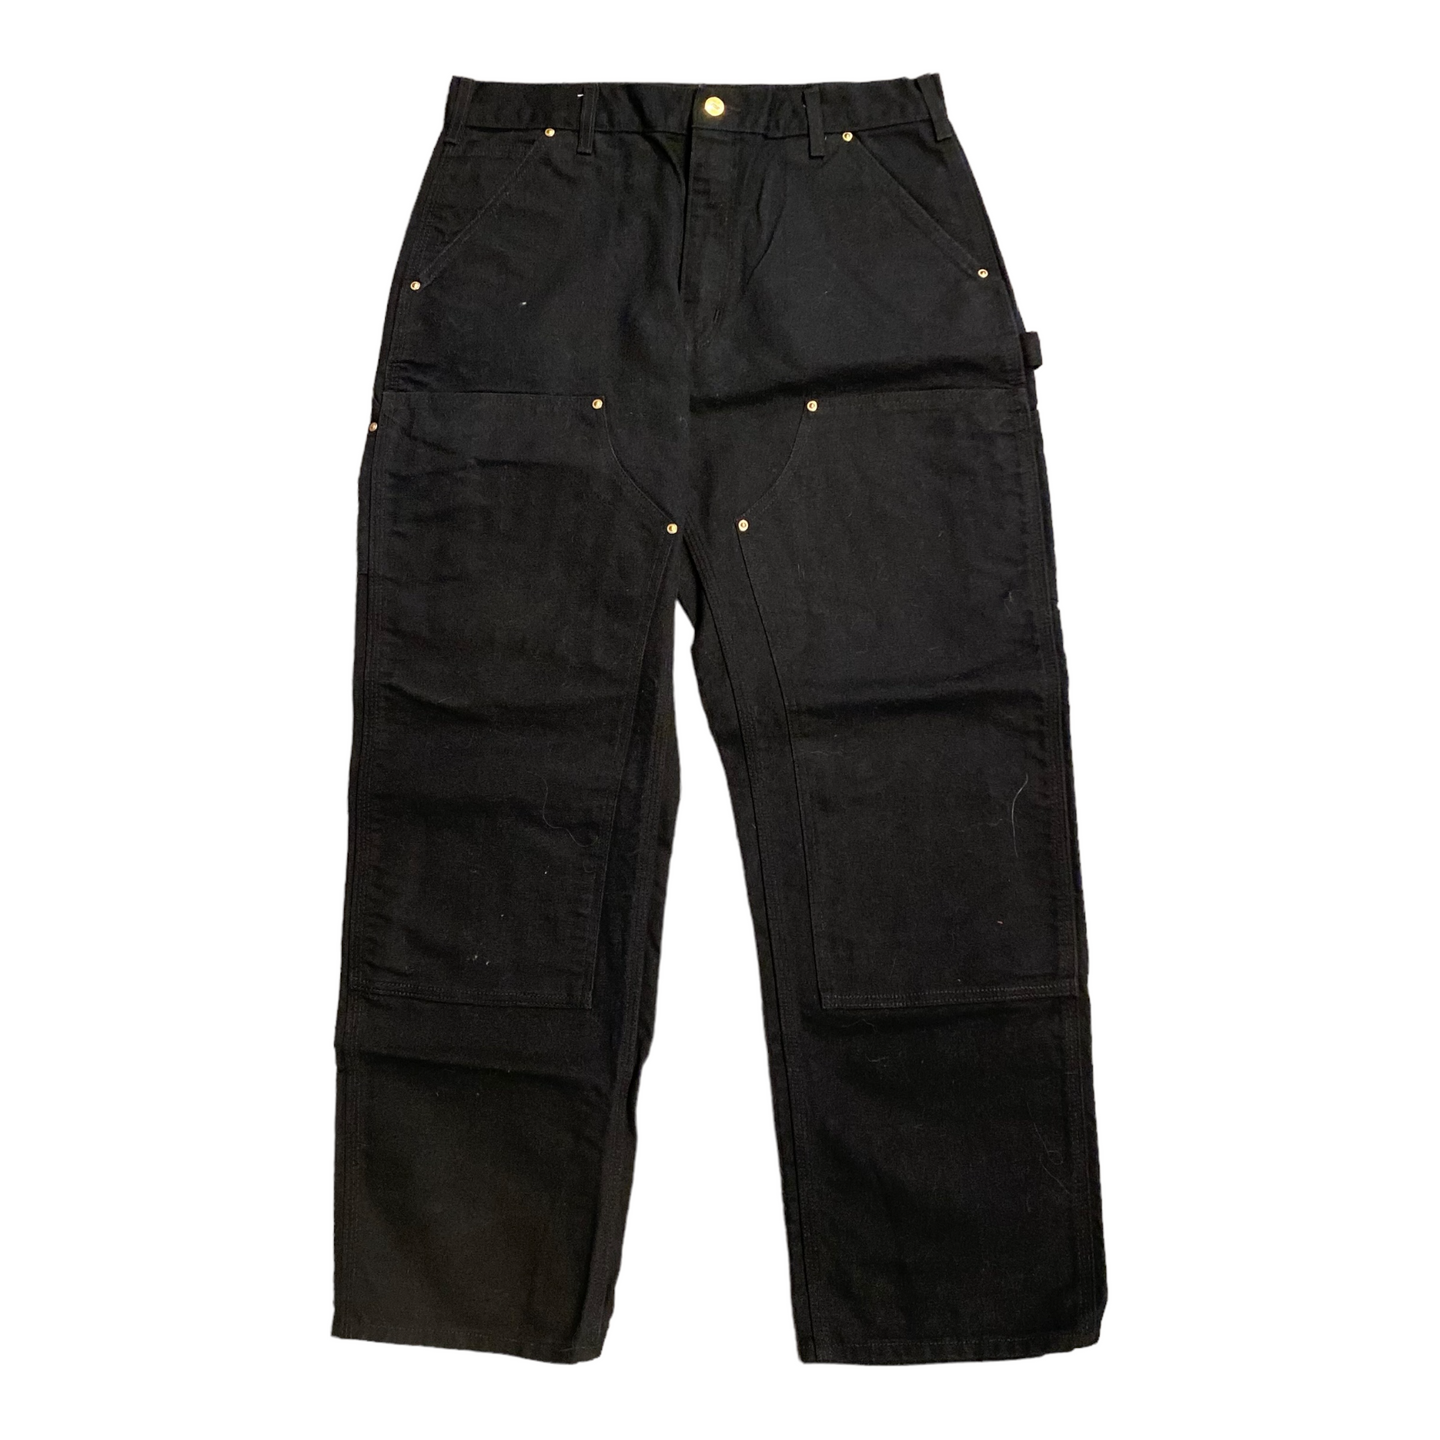 Vintage Carhartt double knee pants 34x30